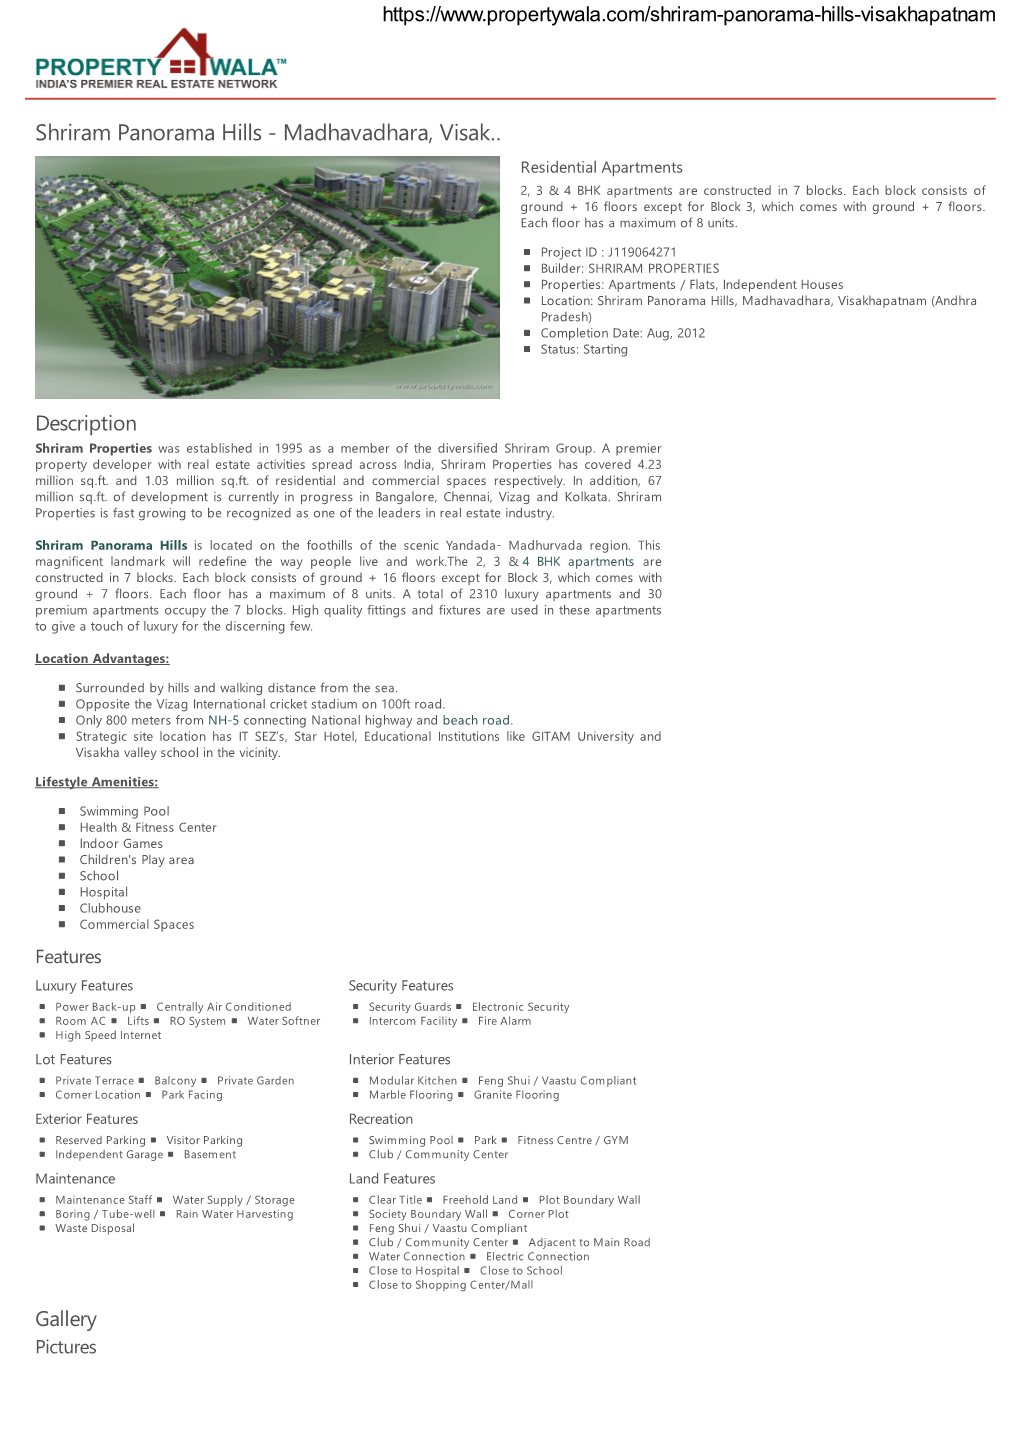 Shriram Panorama Hills - Madhavadhara, Visak… Residential Apartments 2, 3 & 4 BHK Apartments Are Constructed in 7 Blocks